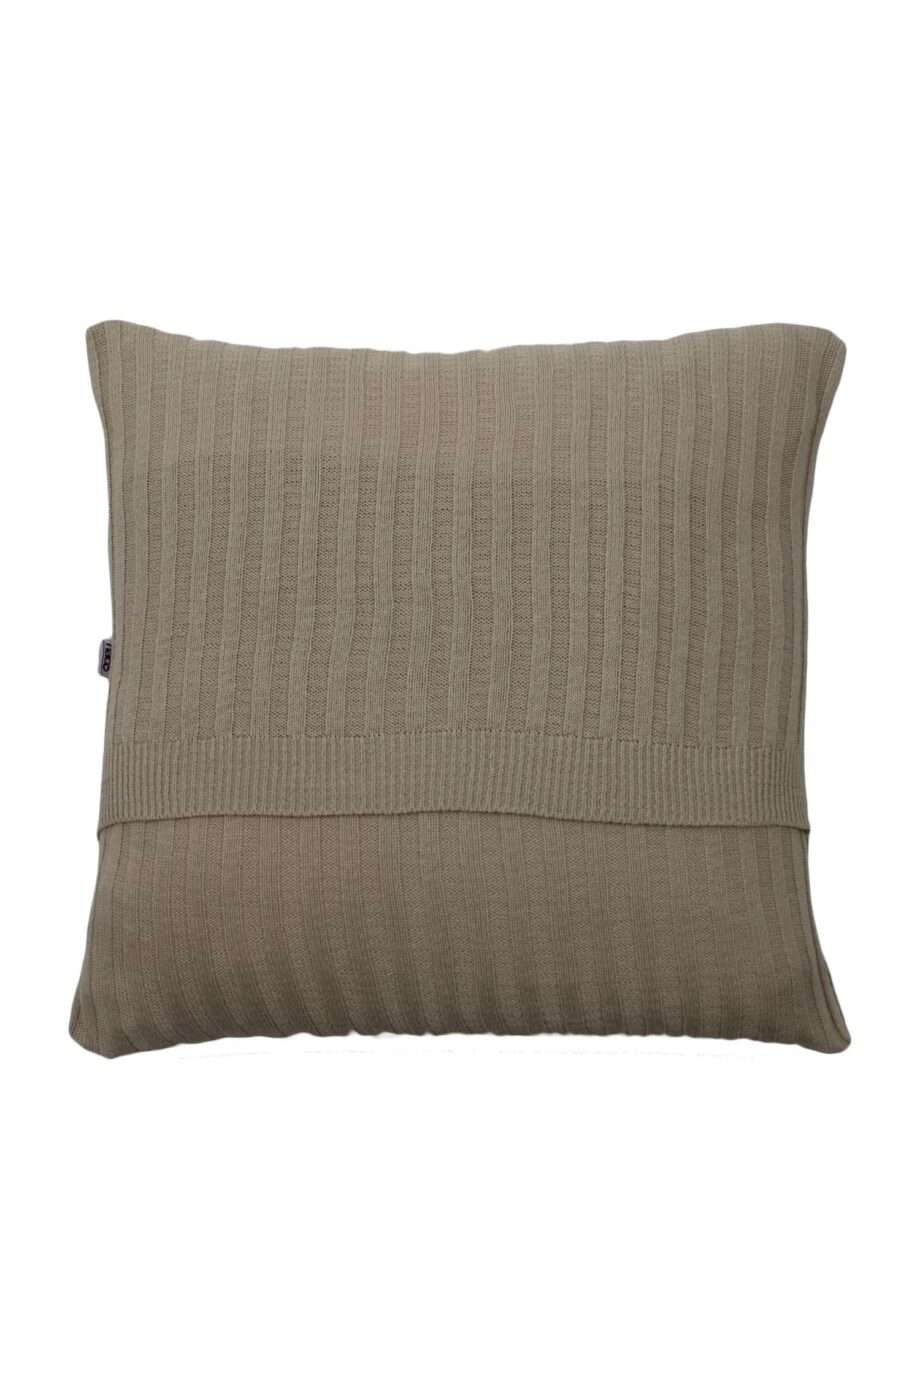 ribs small latte knitted cotton pillowcase medium